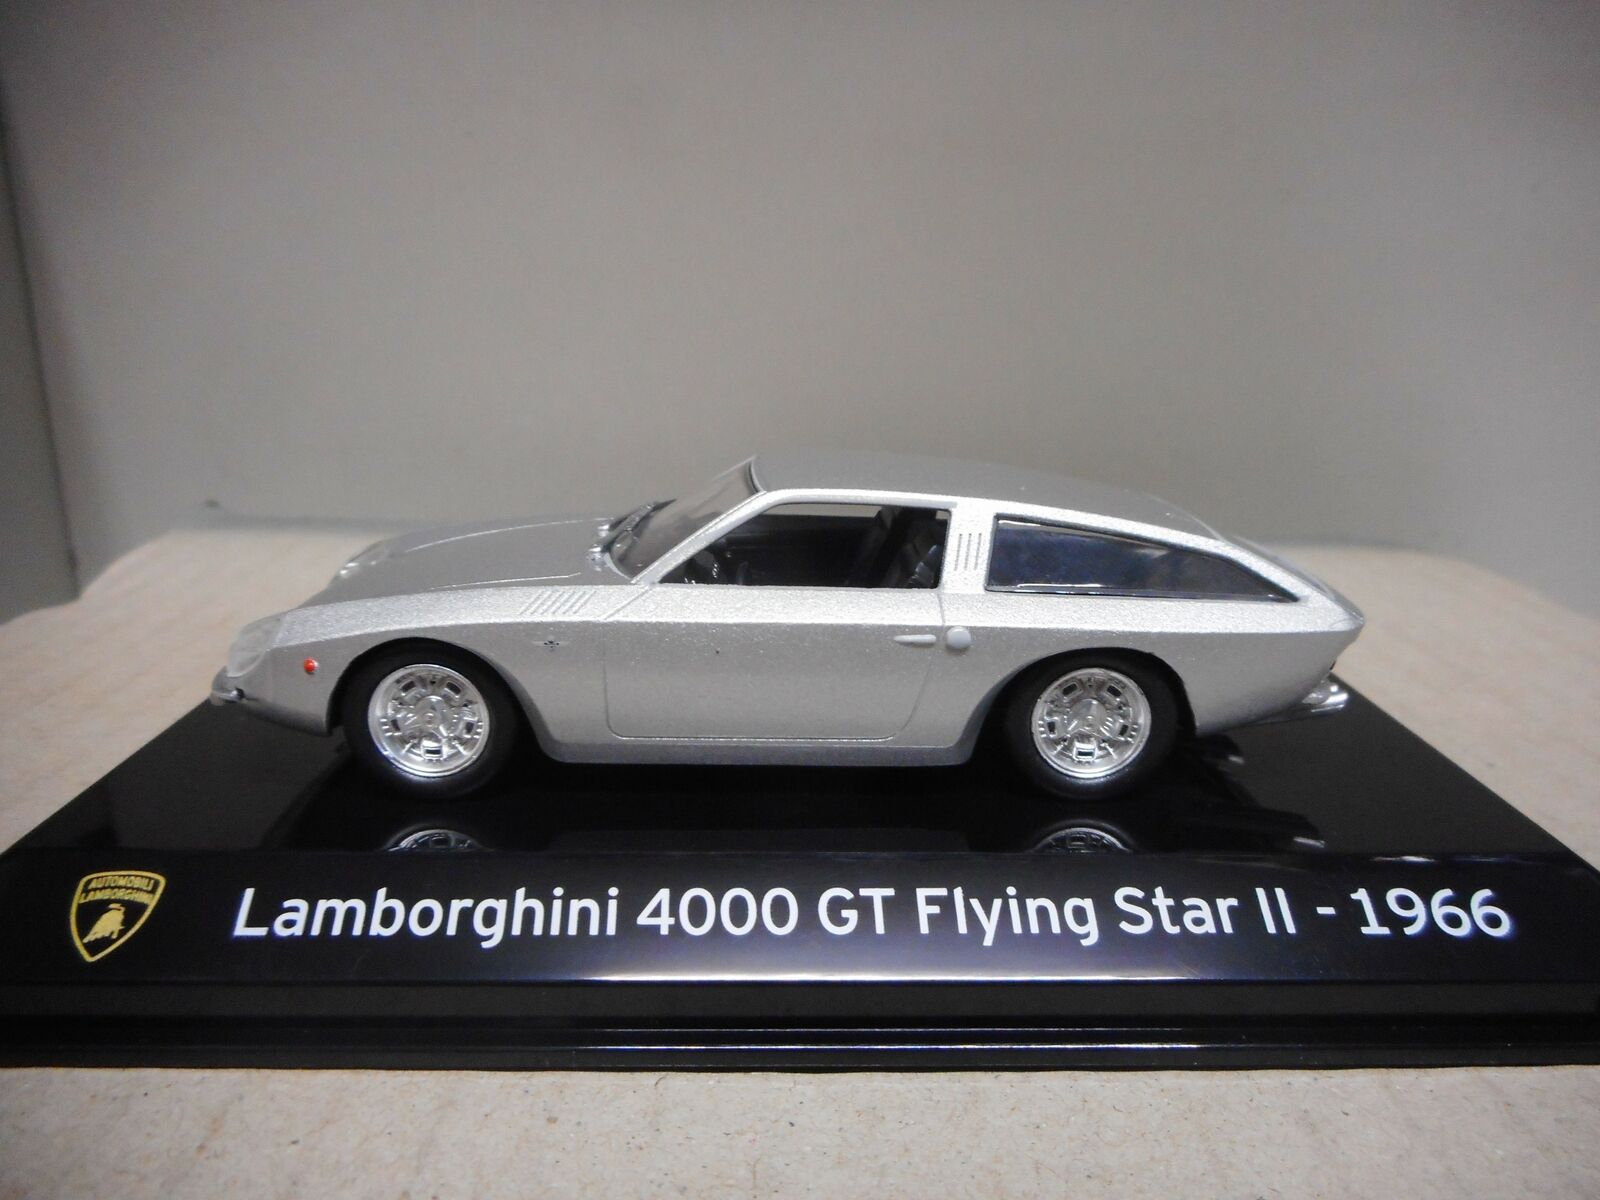 Lamborghini Flying Star Ii Wallpapers